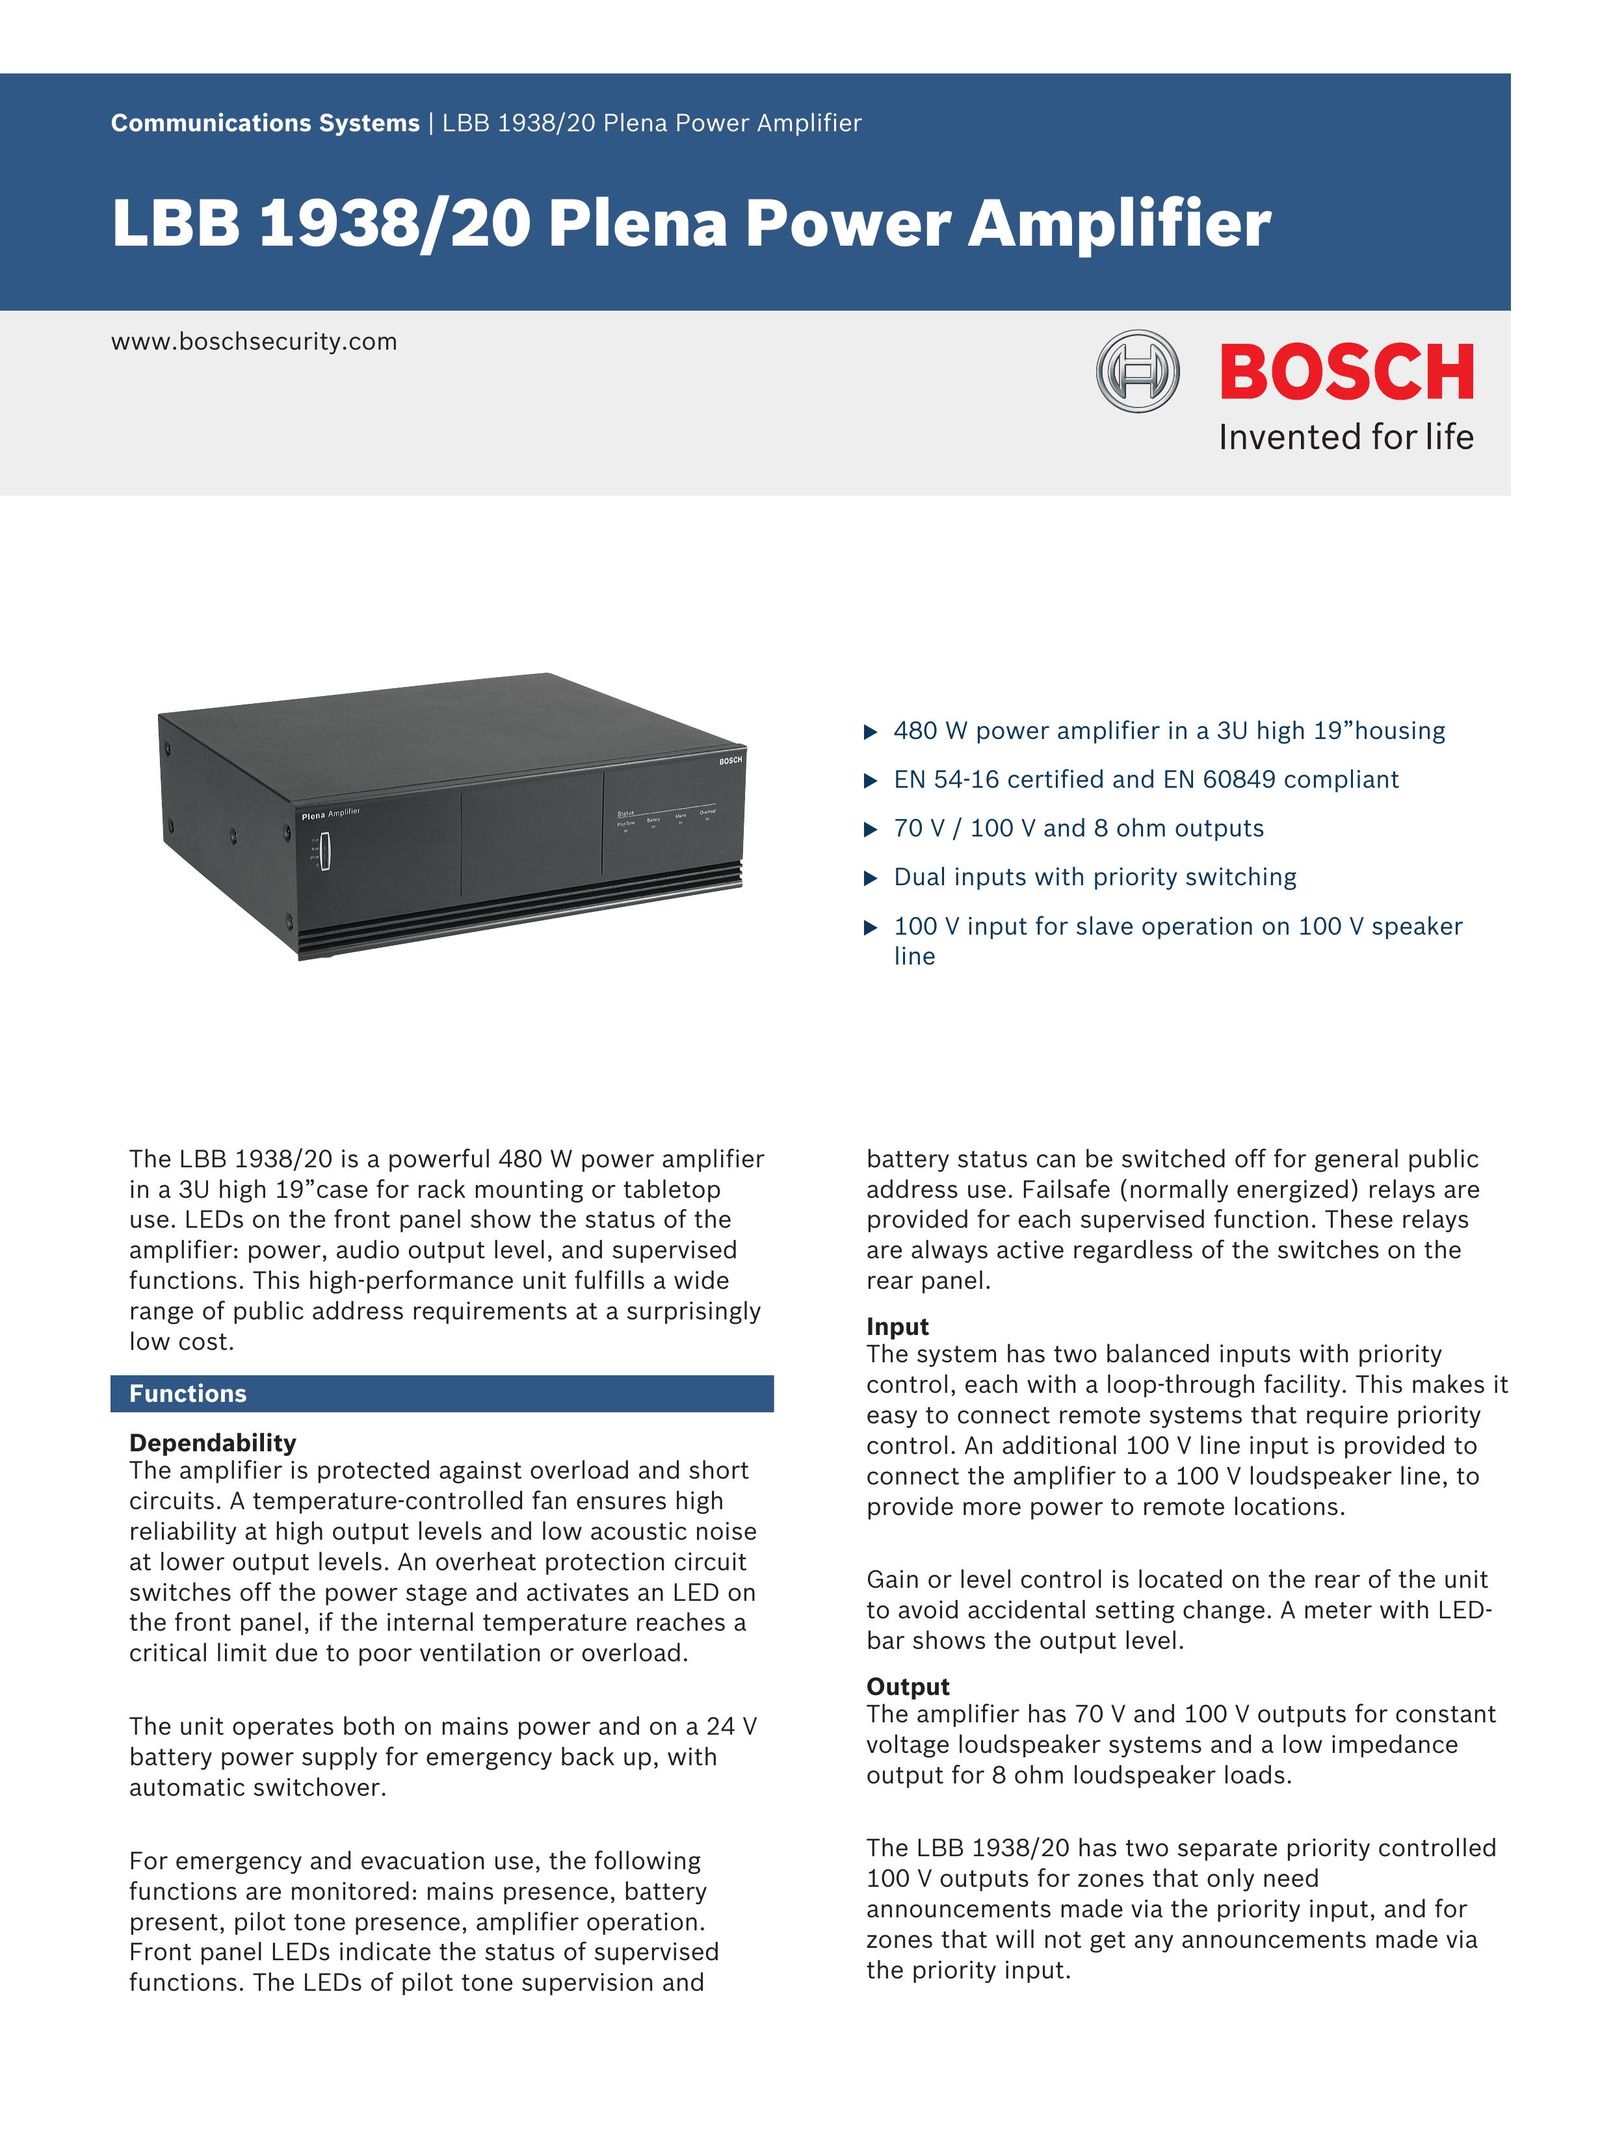 Bosch Appliances LBB 1938/20 Stereo Amplifier User Manual